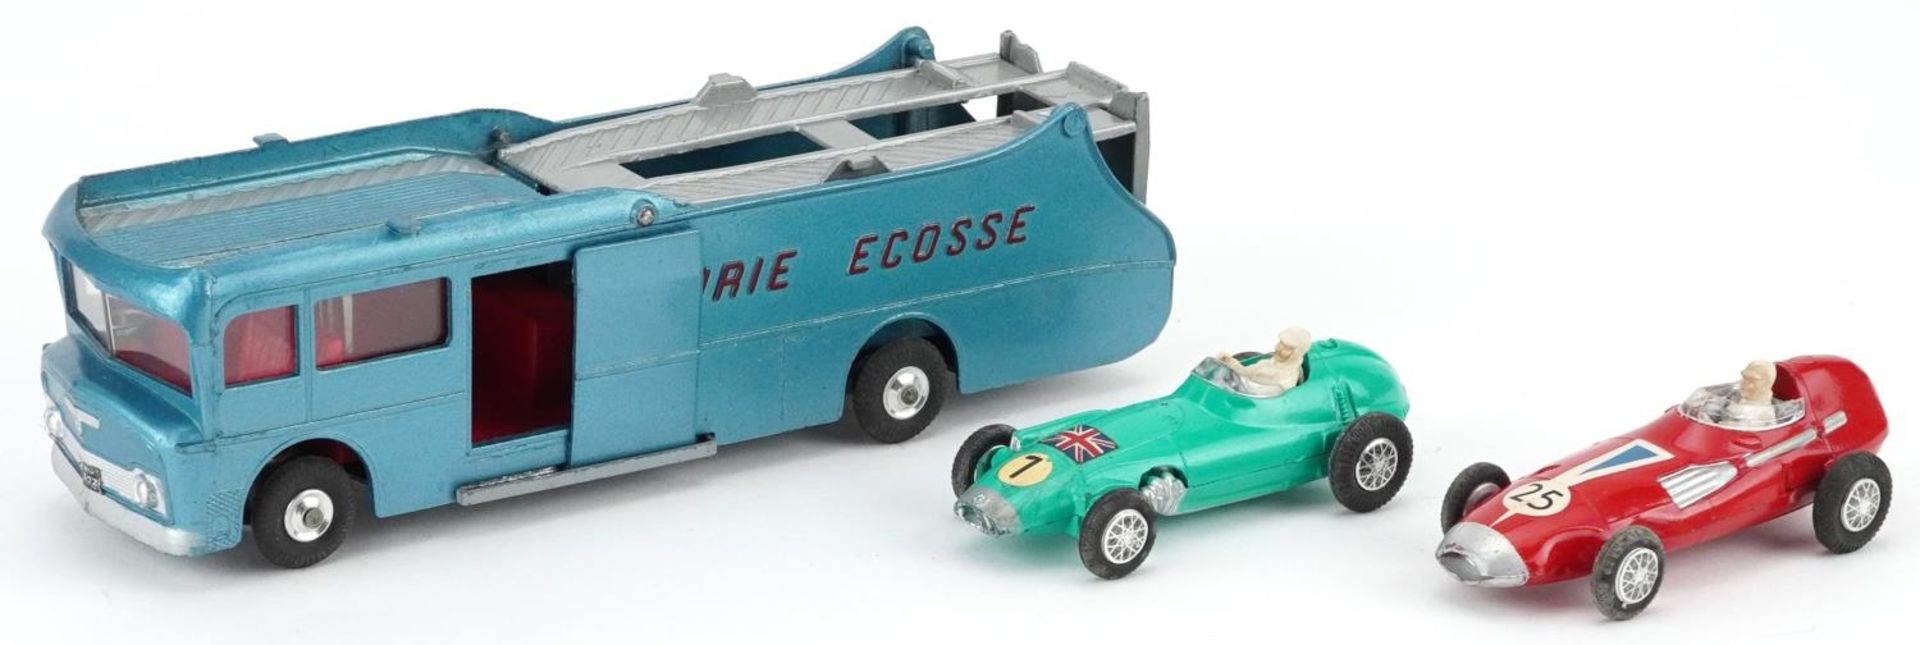 Vintage Corgi Major diecast Ecurie Ecosse racing car transporter with racing cars, gift set no 16 - Image 2 of 6